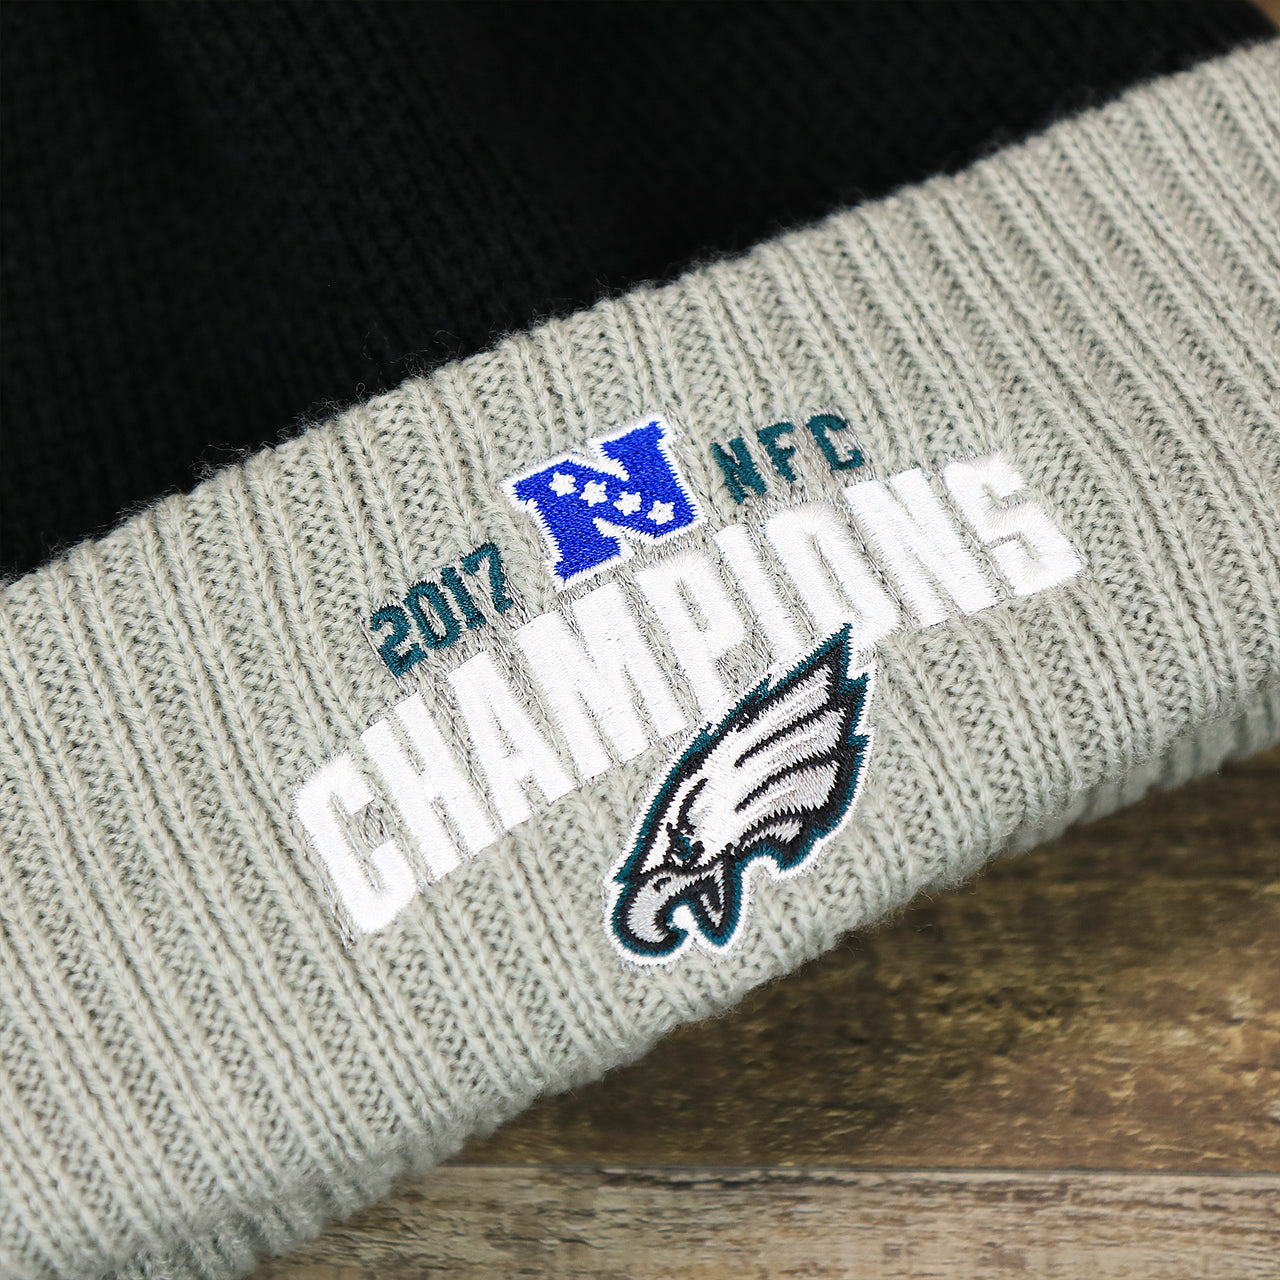 The 2017 NFC Eagles Champions Logo on the Philadelphia Eagles 2017 NFC Champions Gray Cuff NFL Pom Pom Winter Beanie | Black Winter Beanie